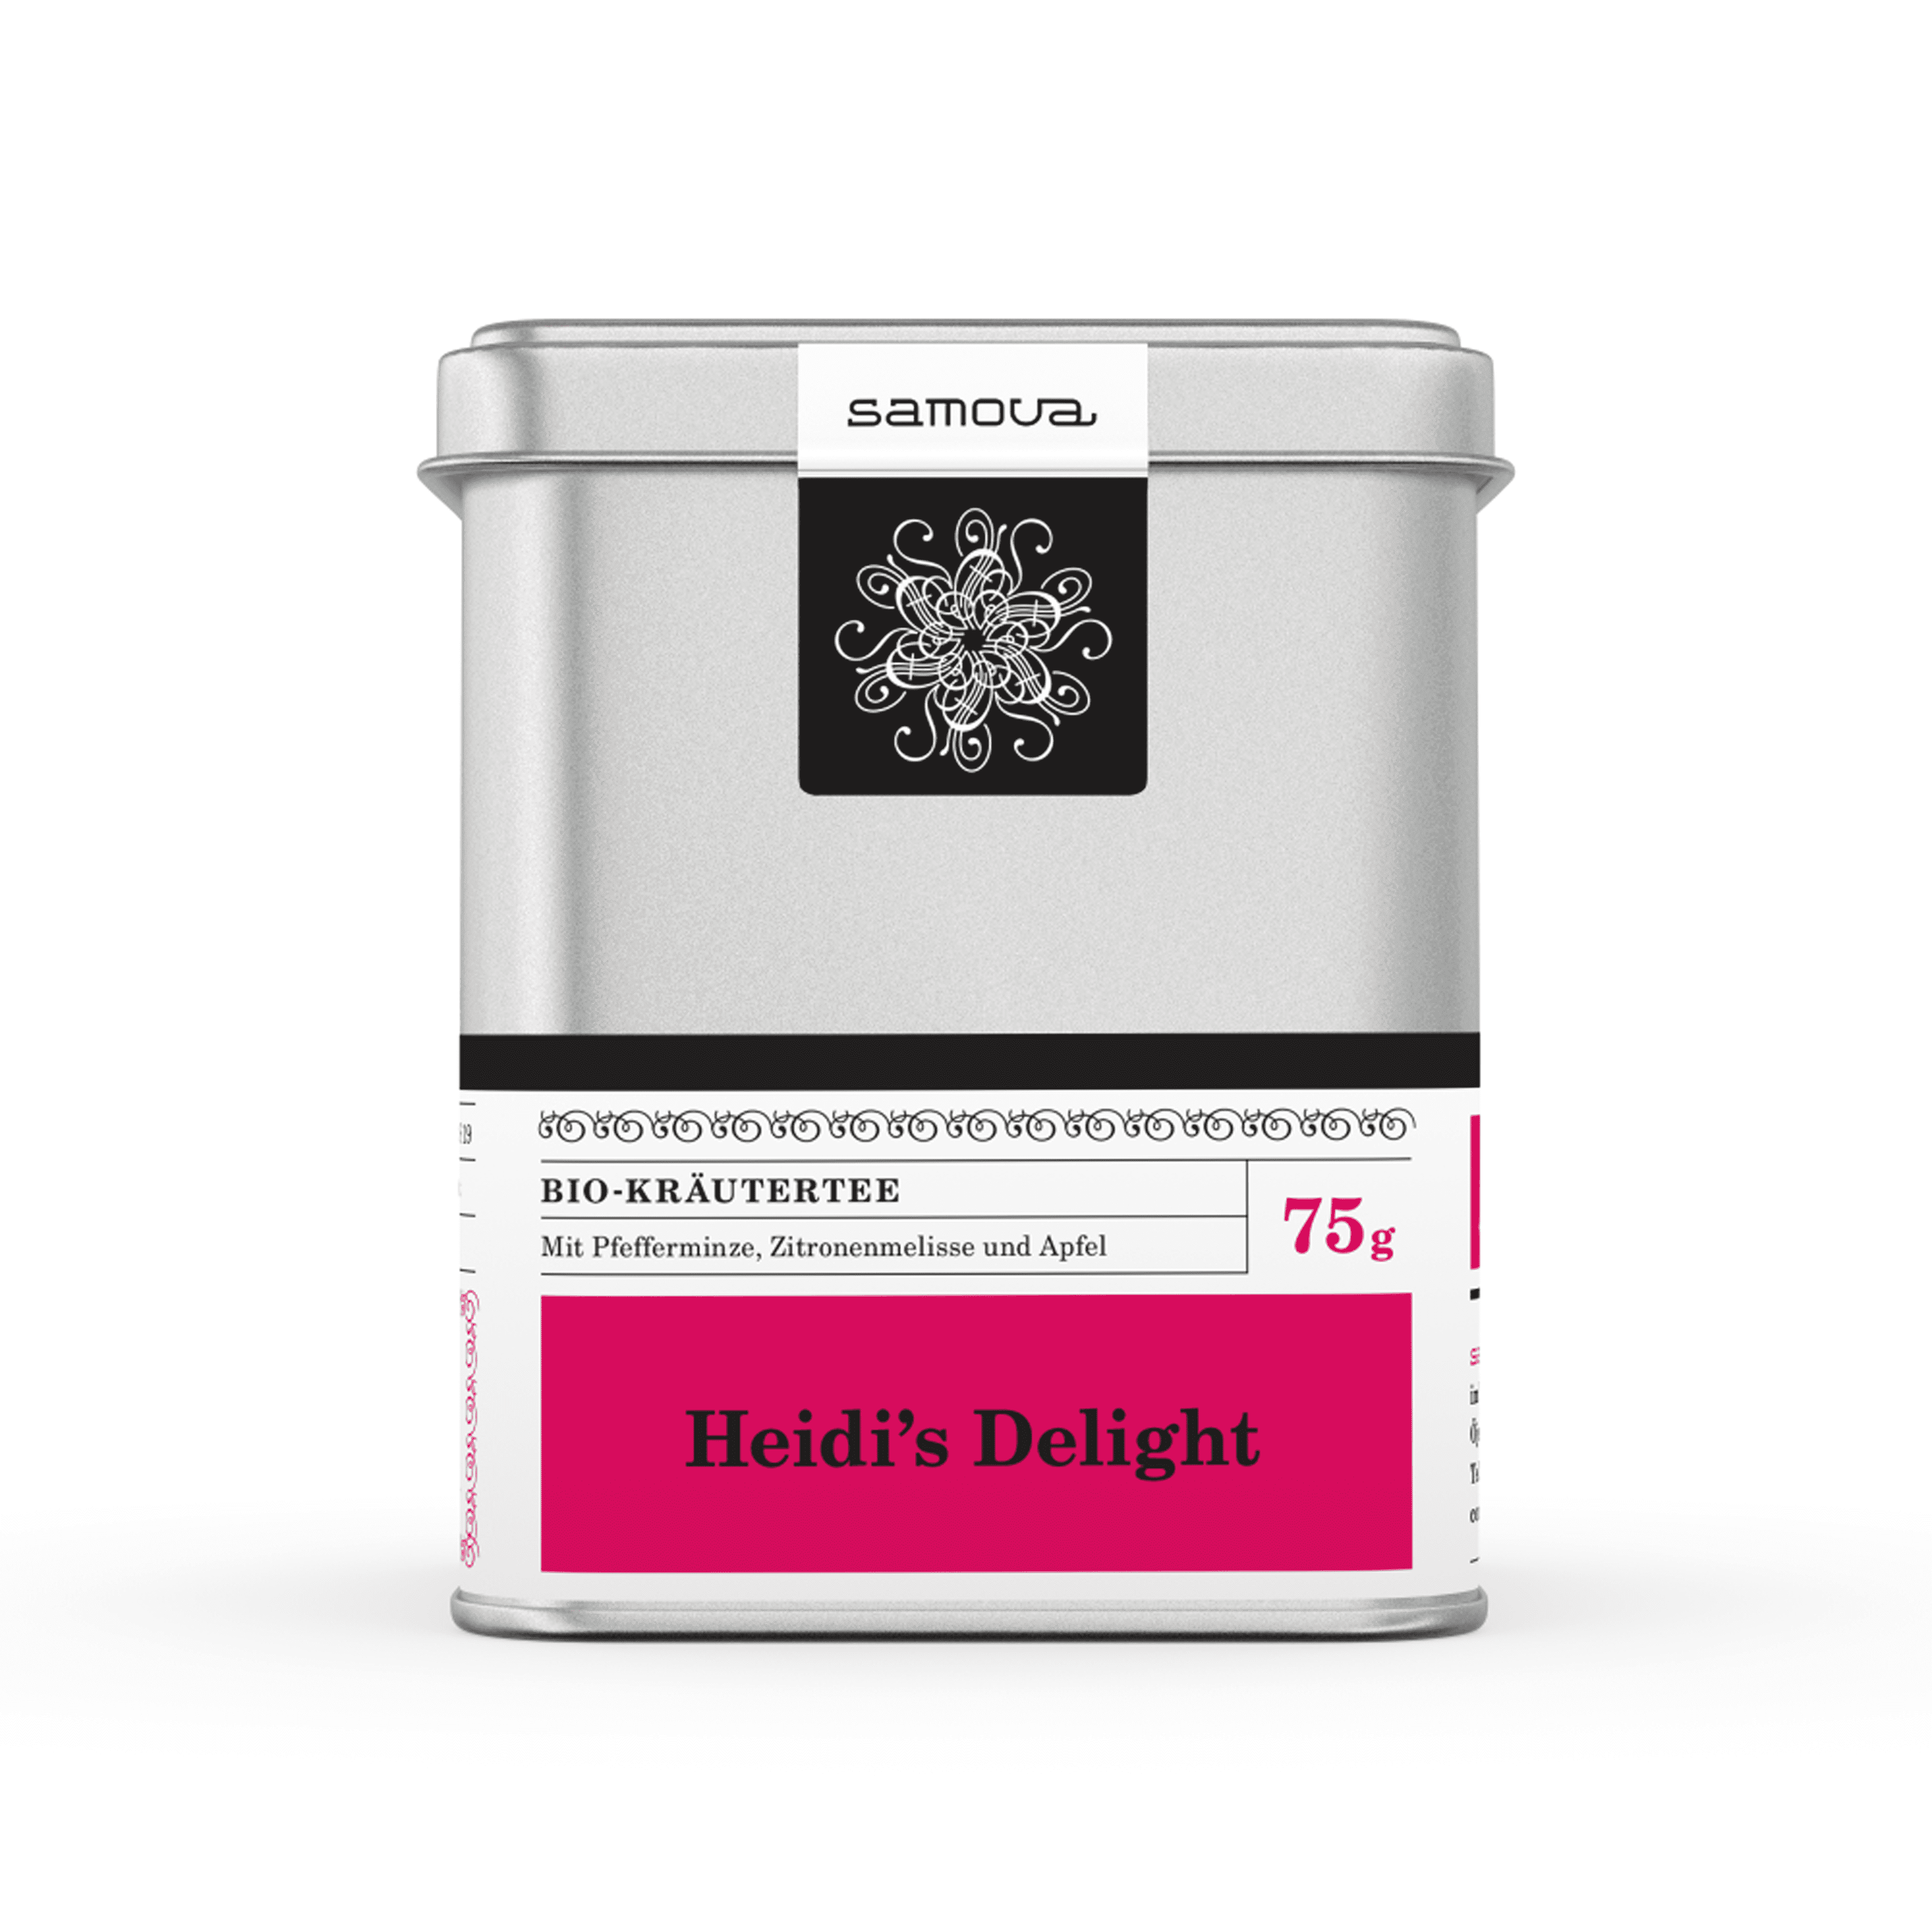 Can of Heidi's Delight tea